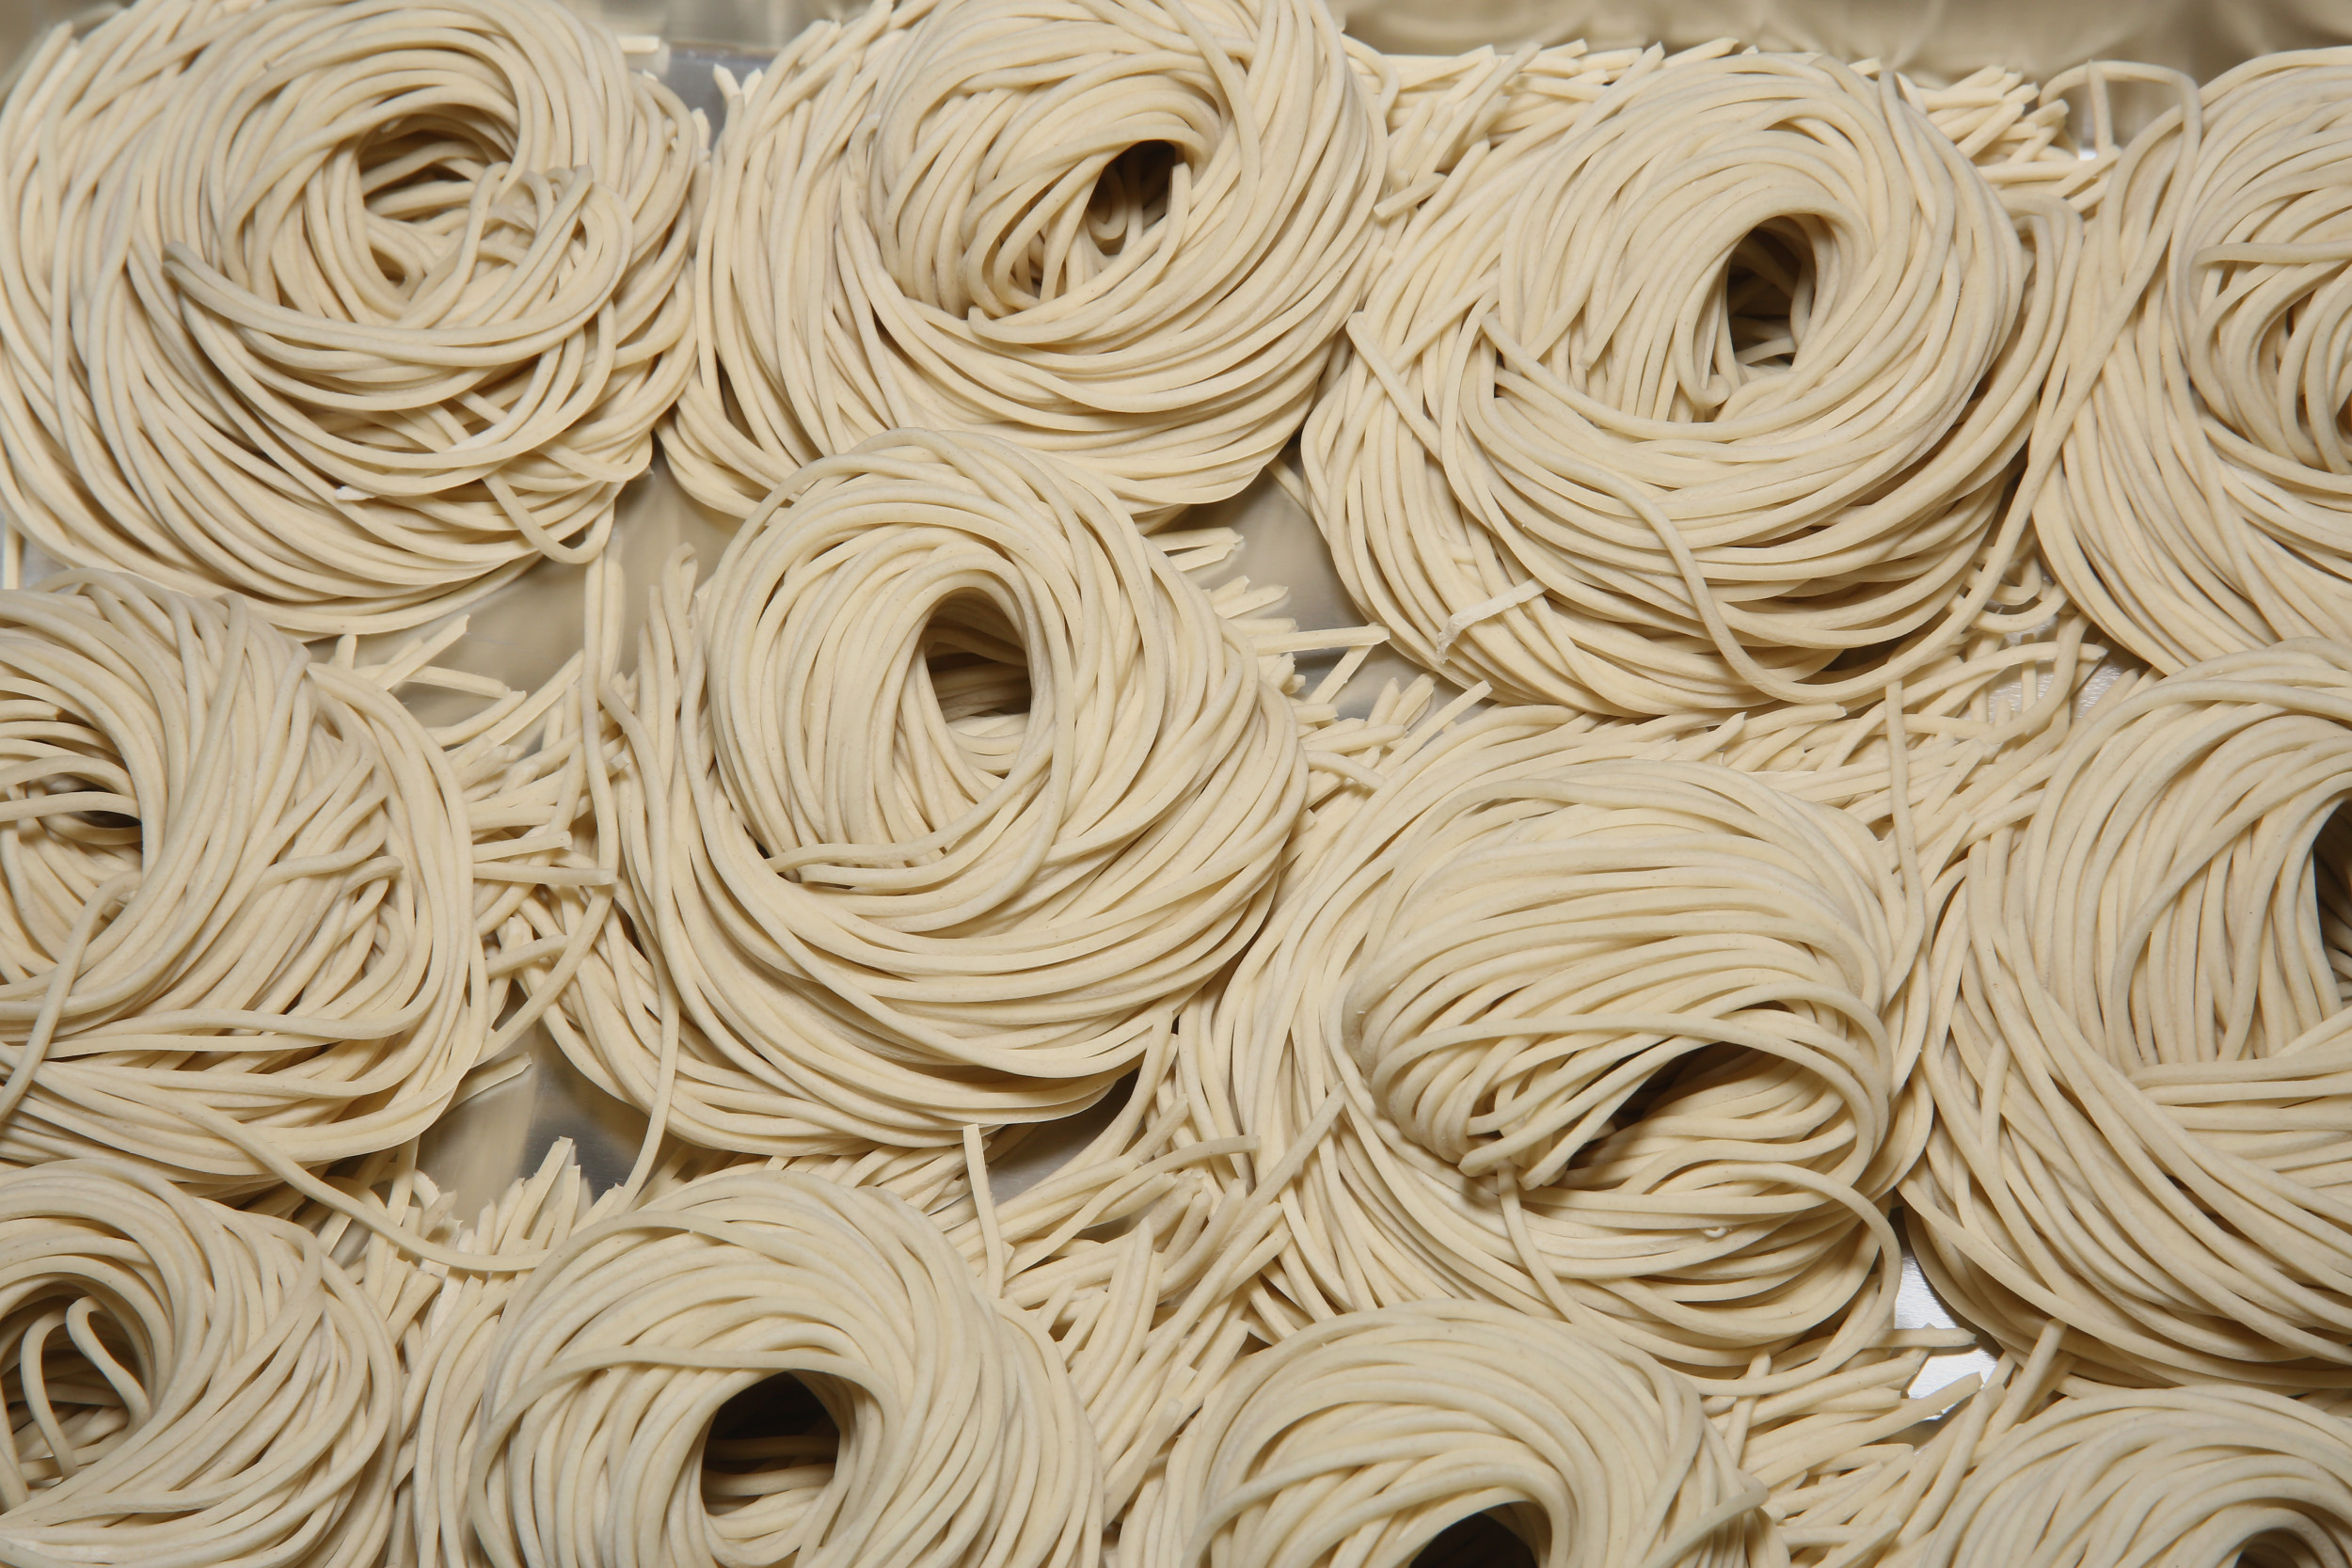 Ramen Noodles Recalled Over Listeria Concerns After Outbreak of Illness ...